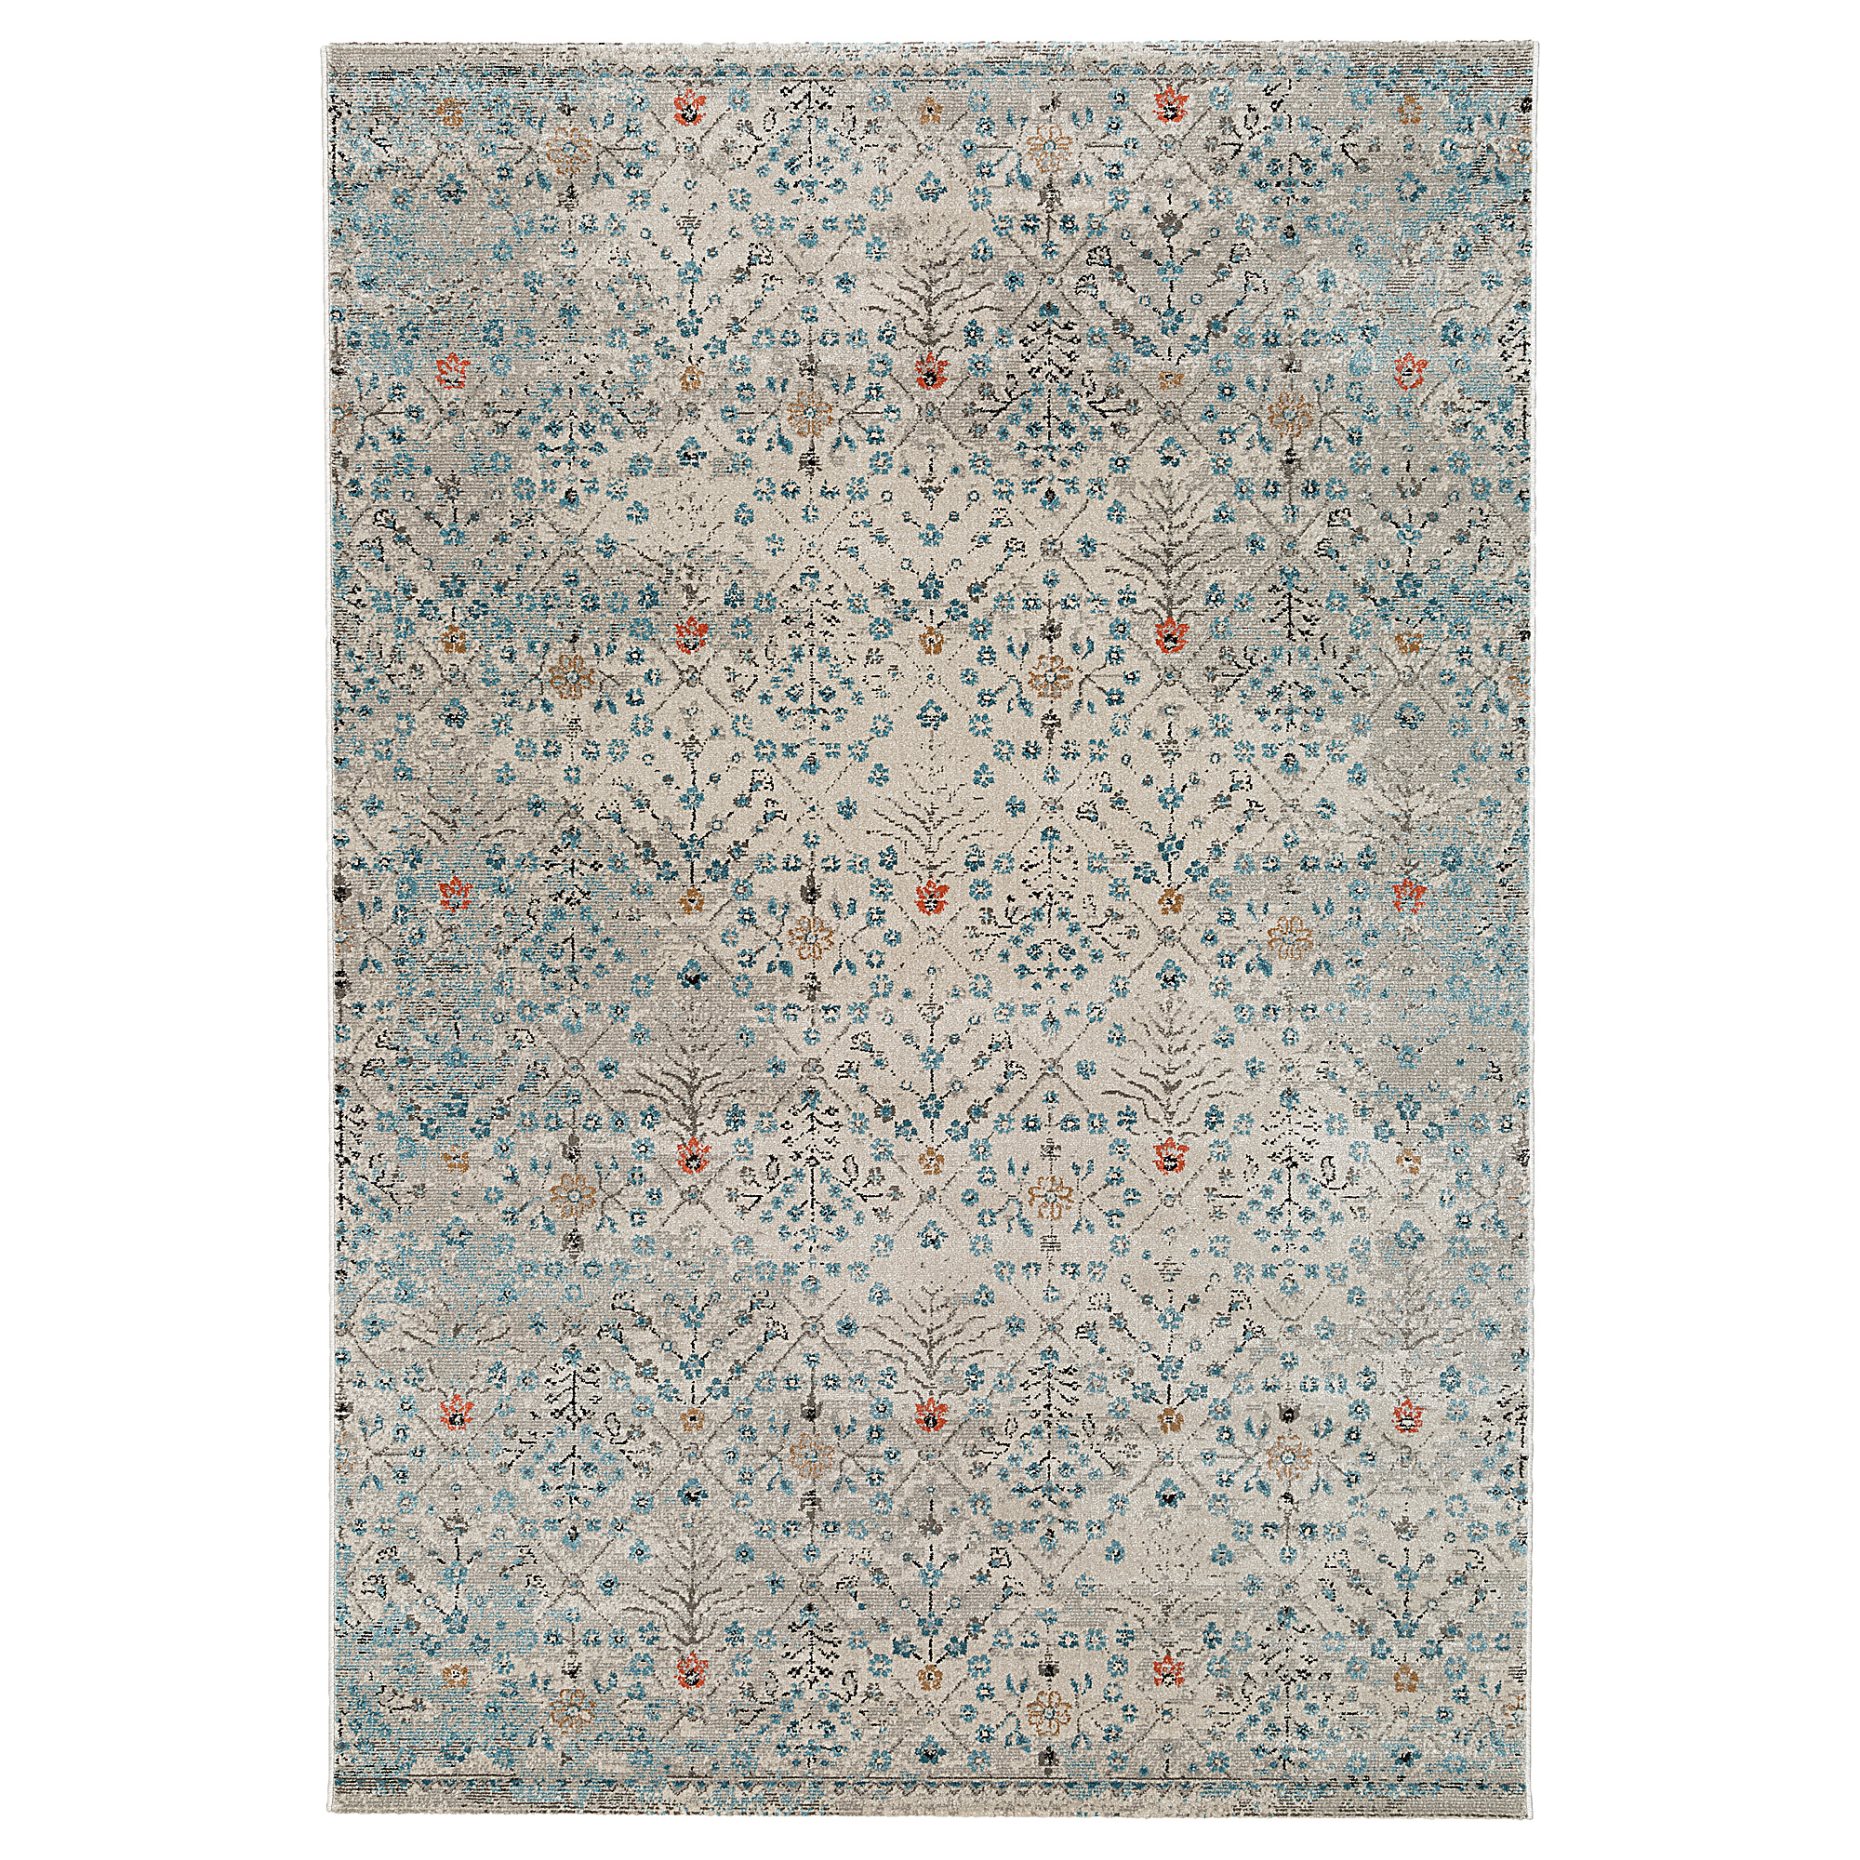 ROMDRUP, rug low pile, 160x230 cm, 804.467.09